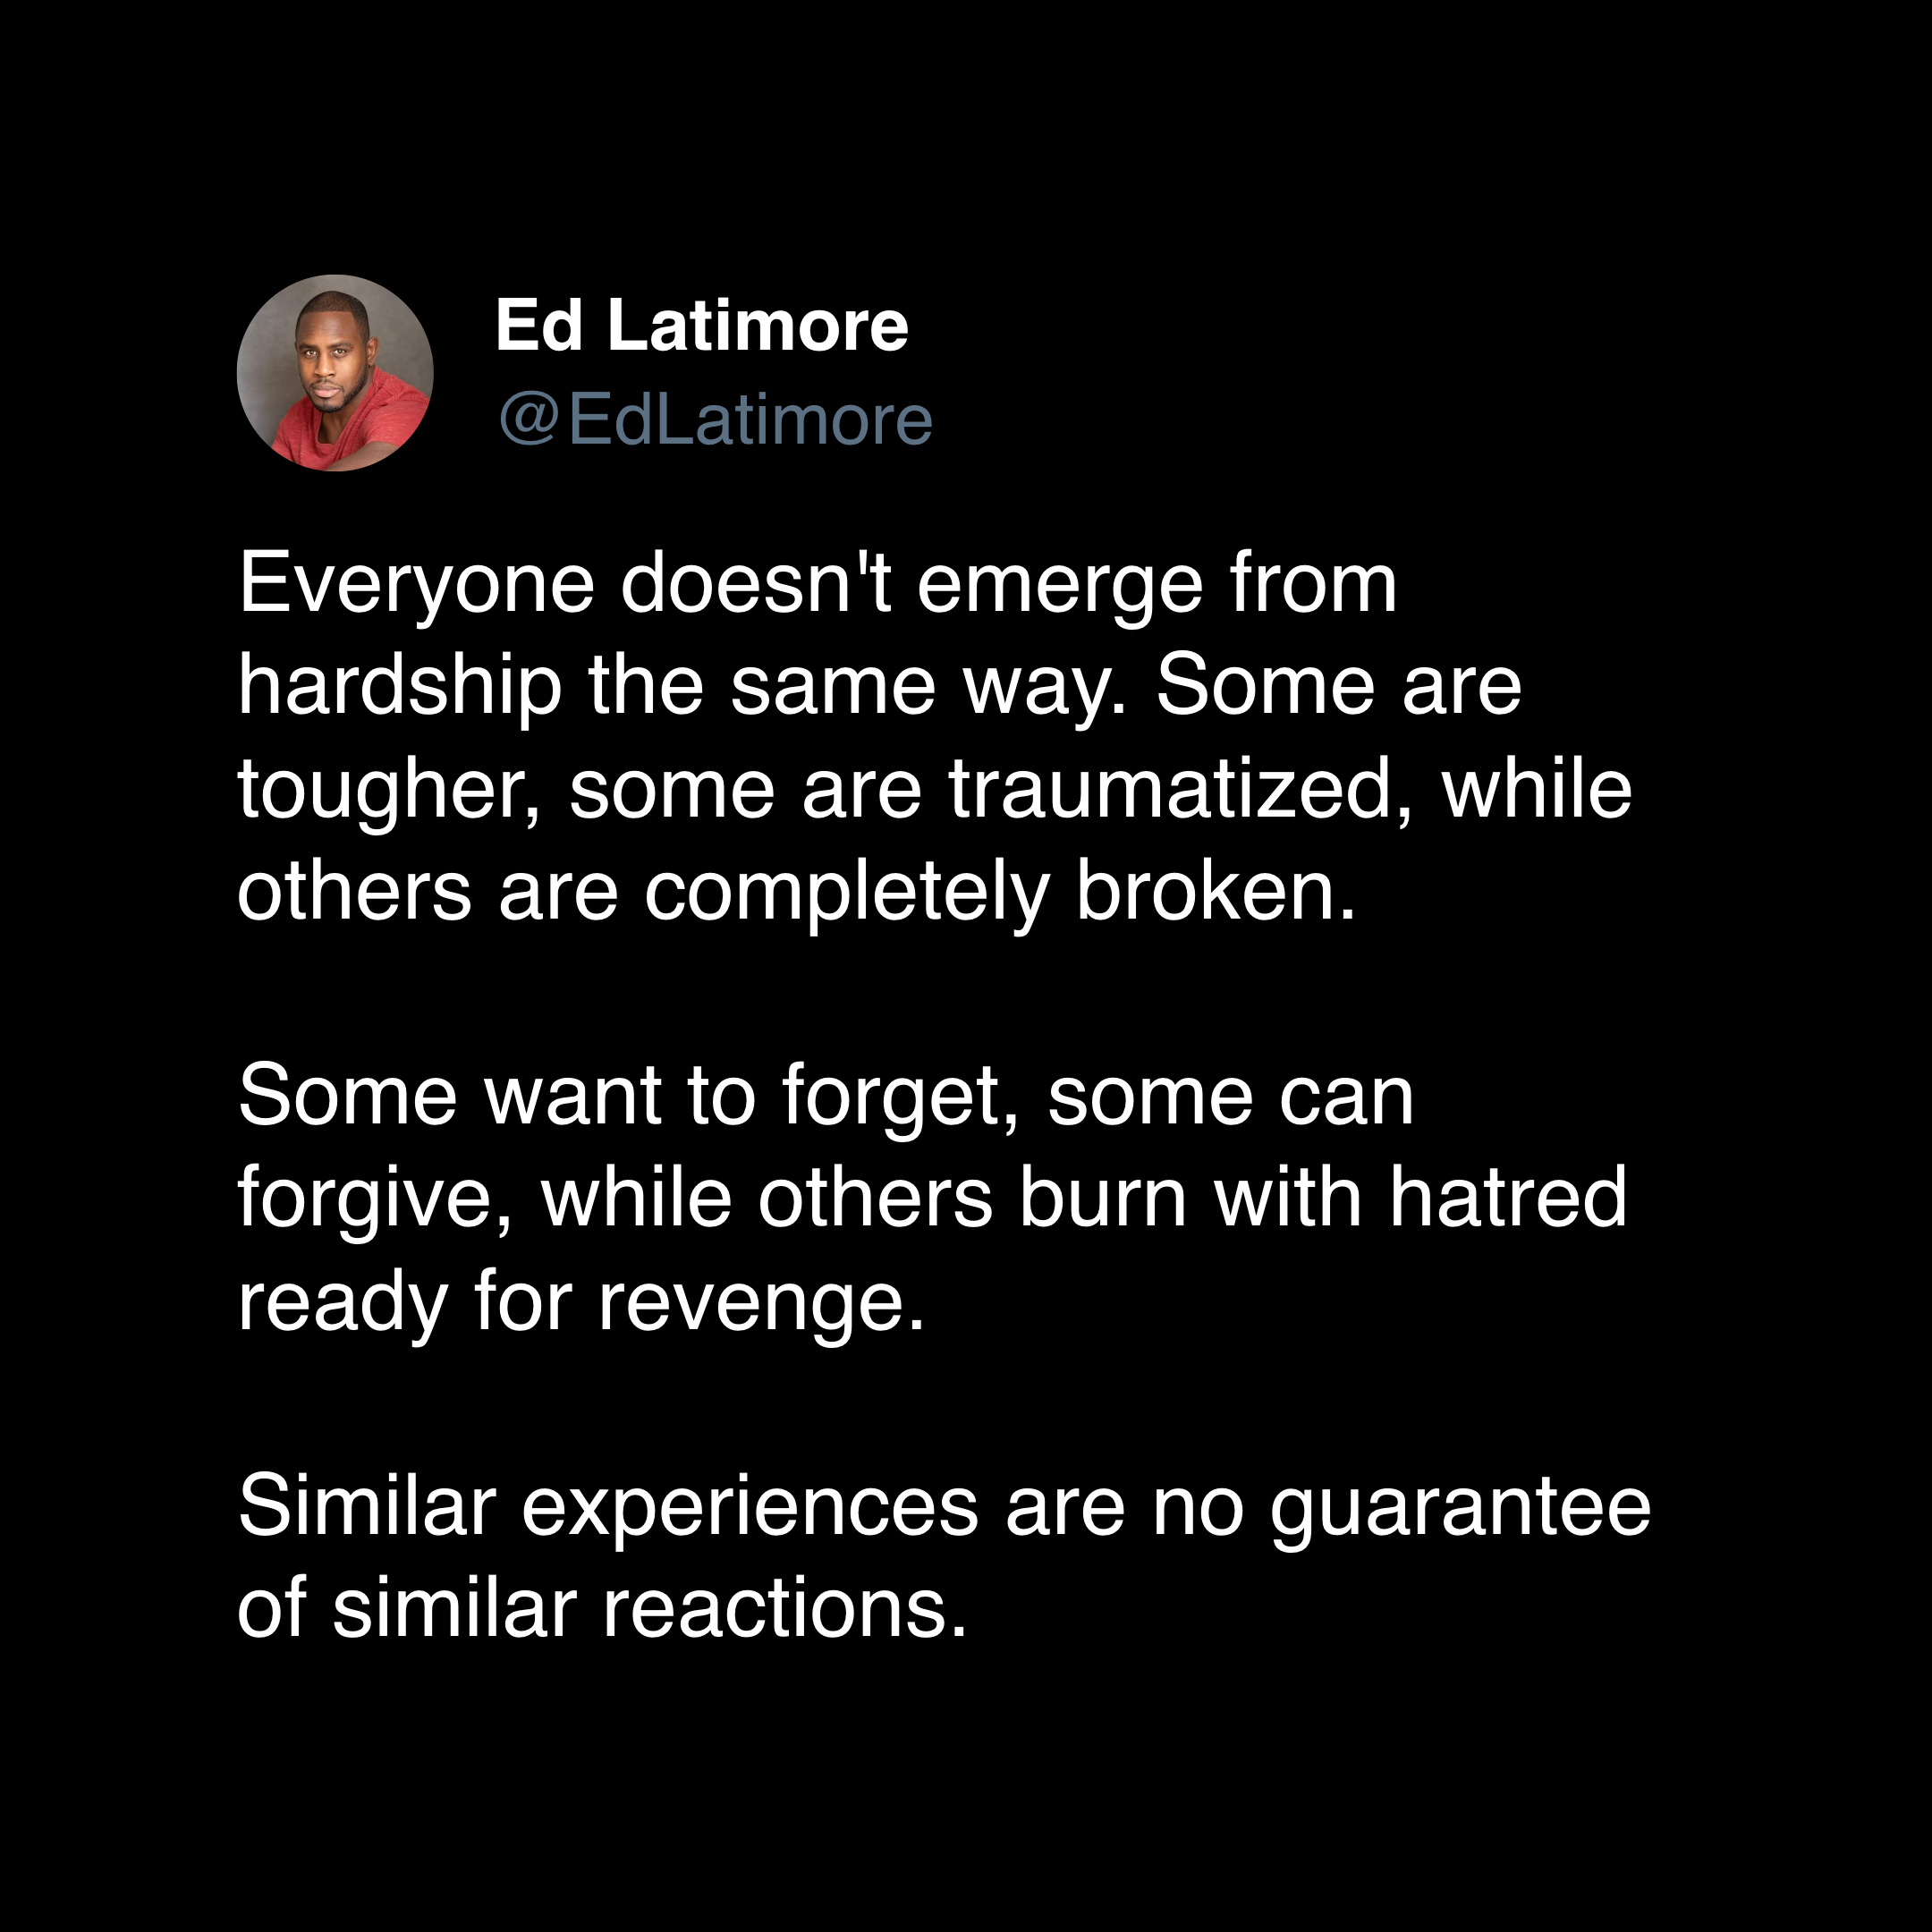 ed latimore forgiveness quotes "similar experiences are no guarantee of forgiveness"